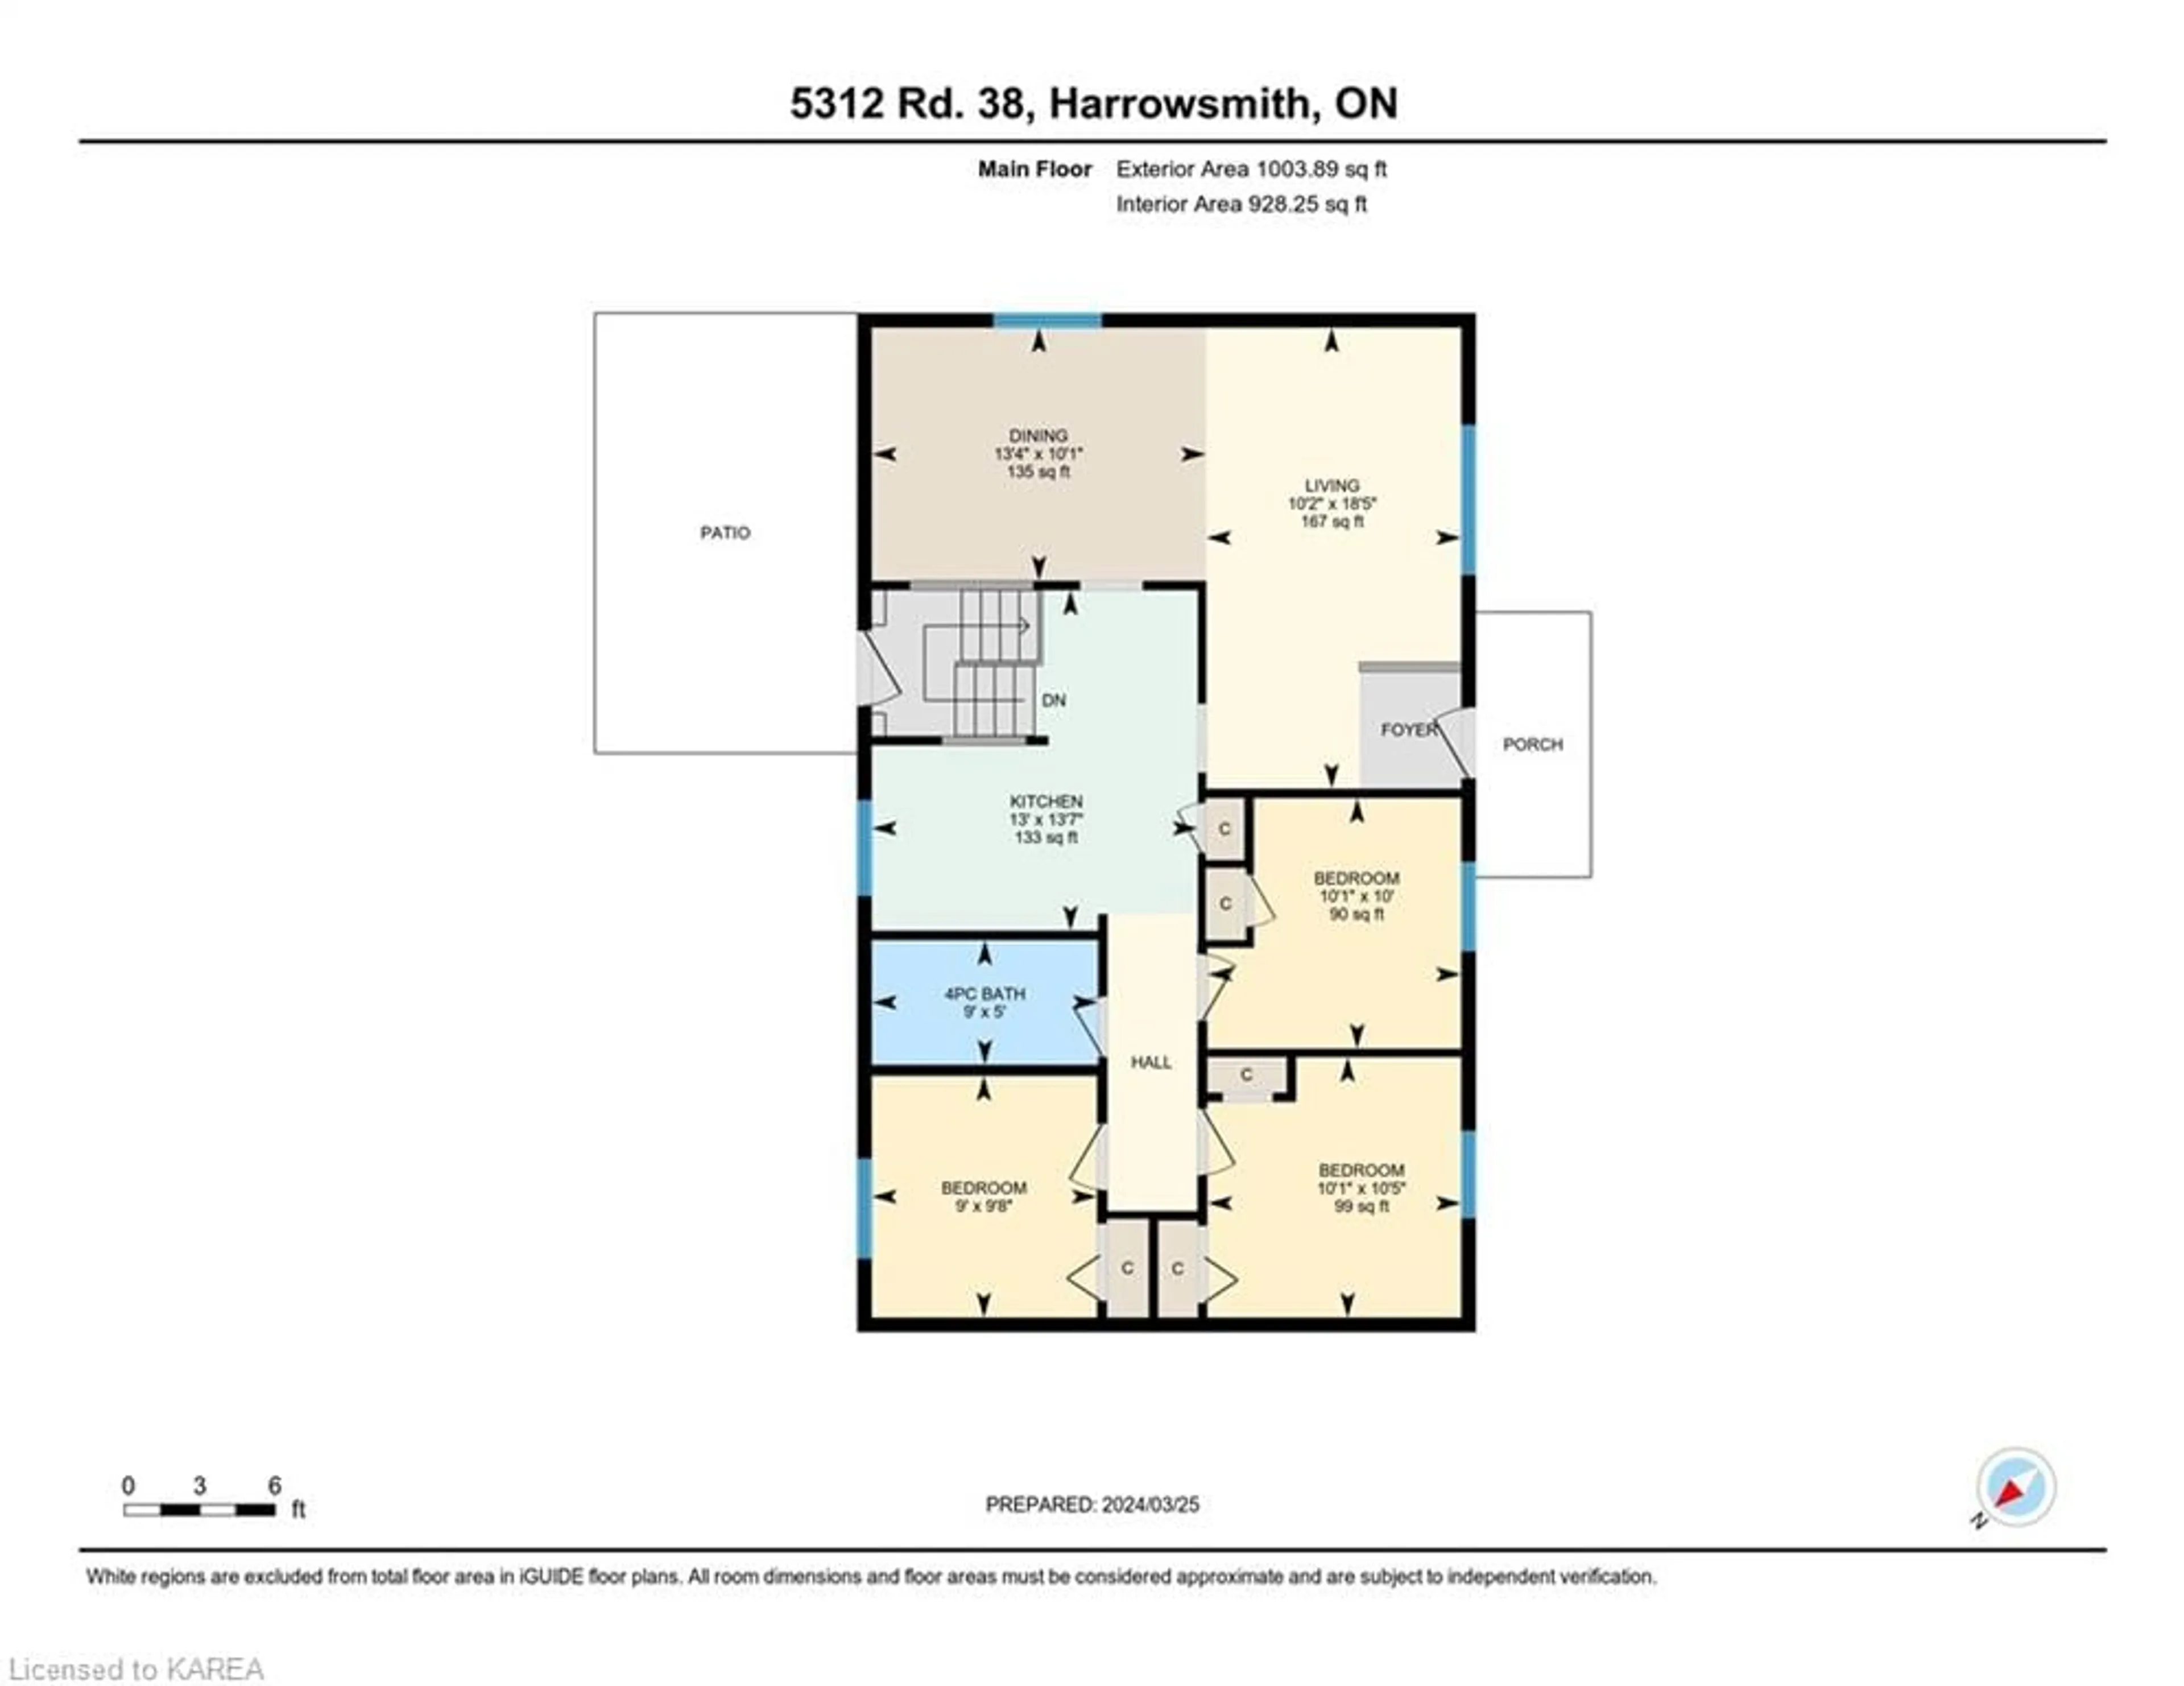 Floor plan for 5312 Road 38, Harrowsmith Ontario K0H 1V0